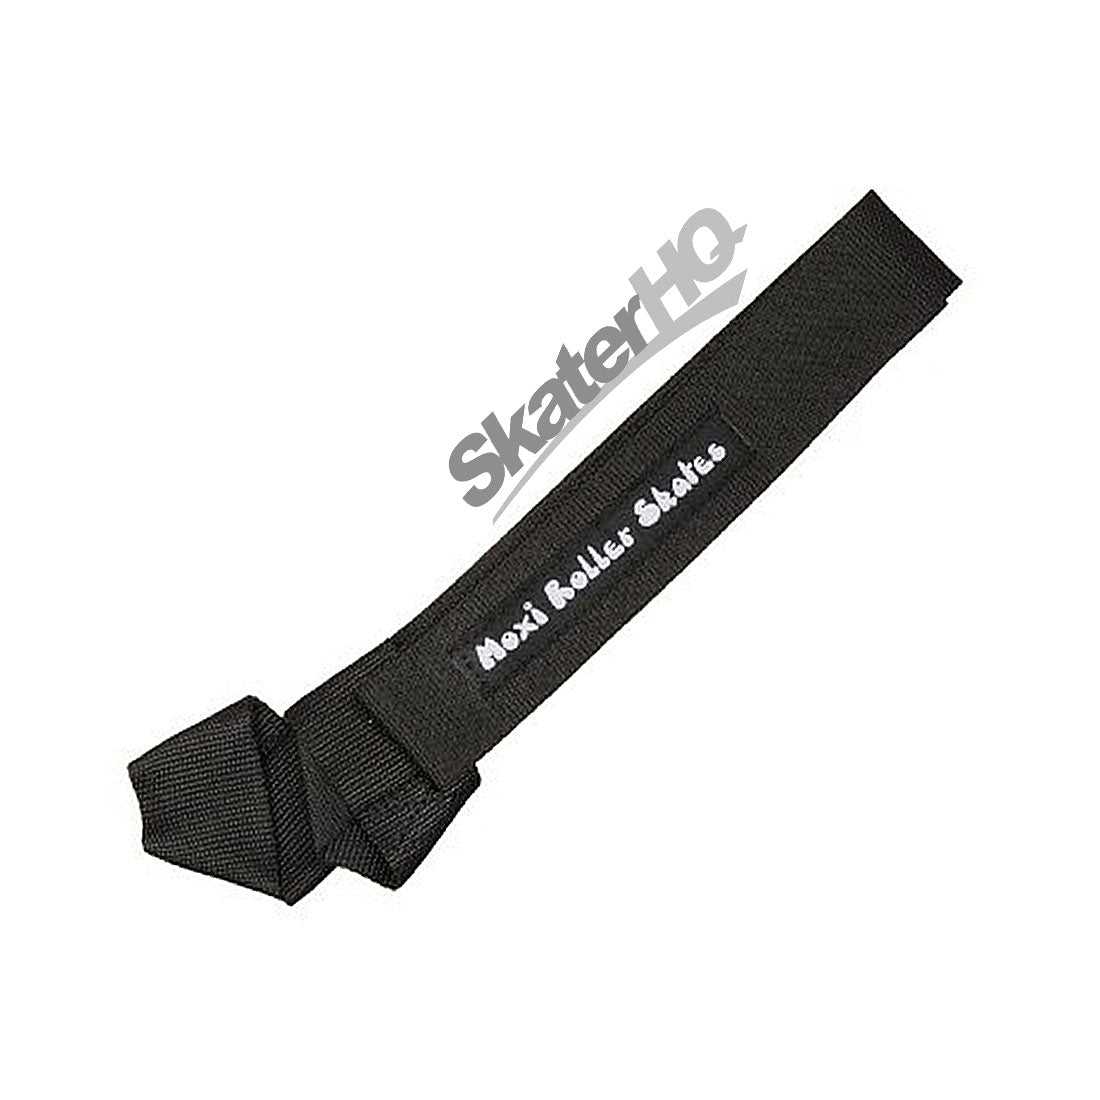 Moxi Skate Leash - Black Roller Skate Accessories